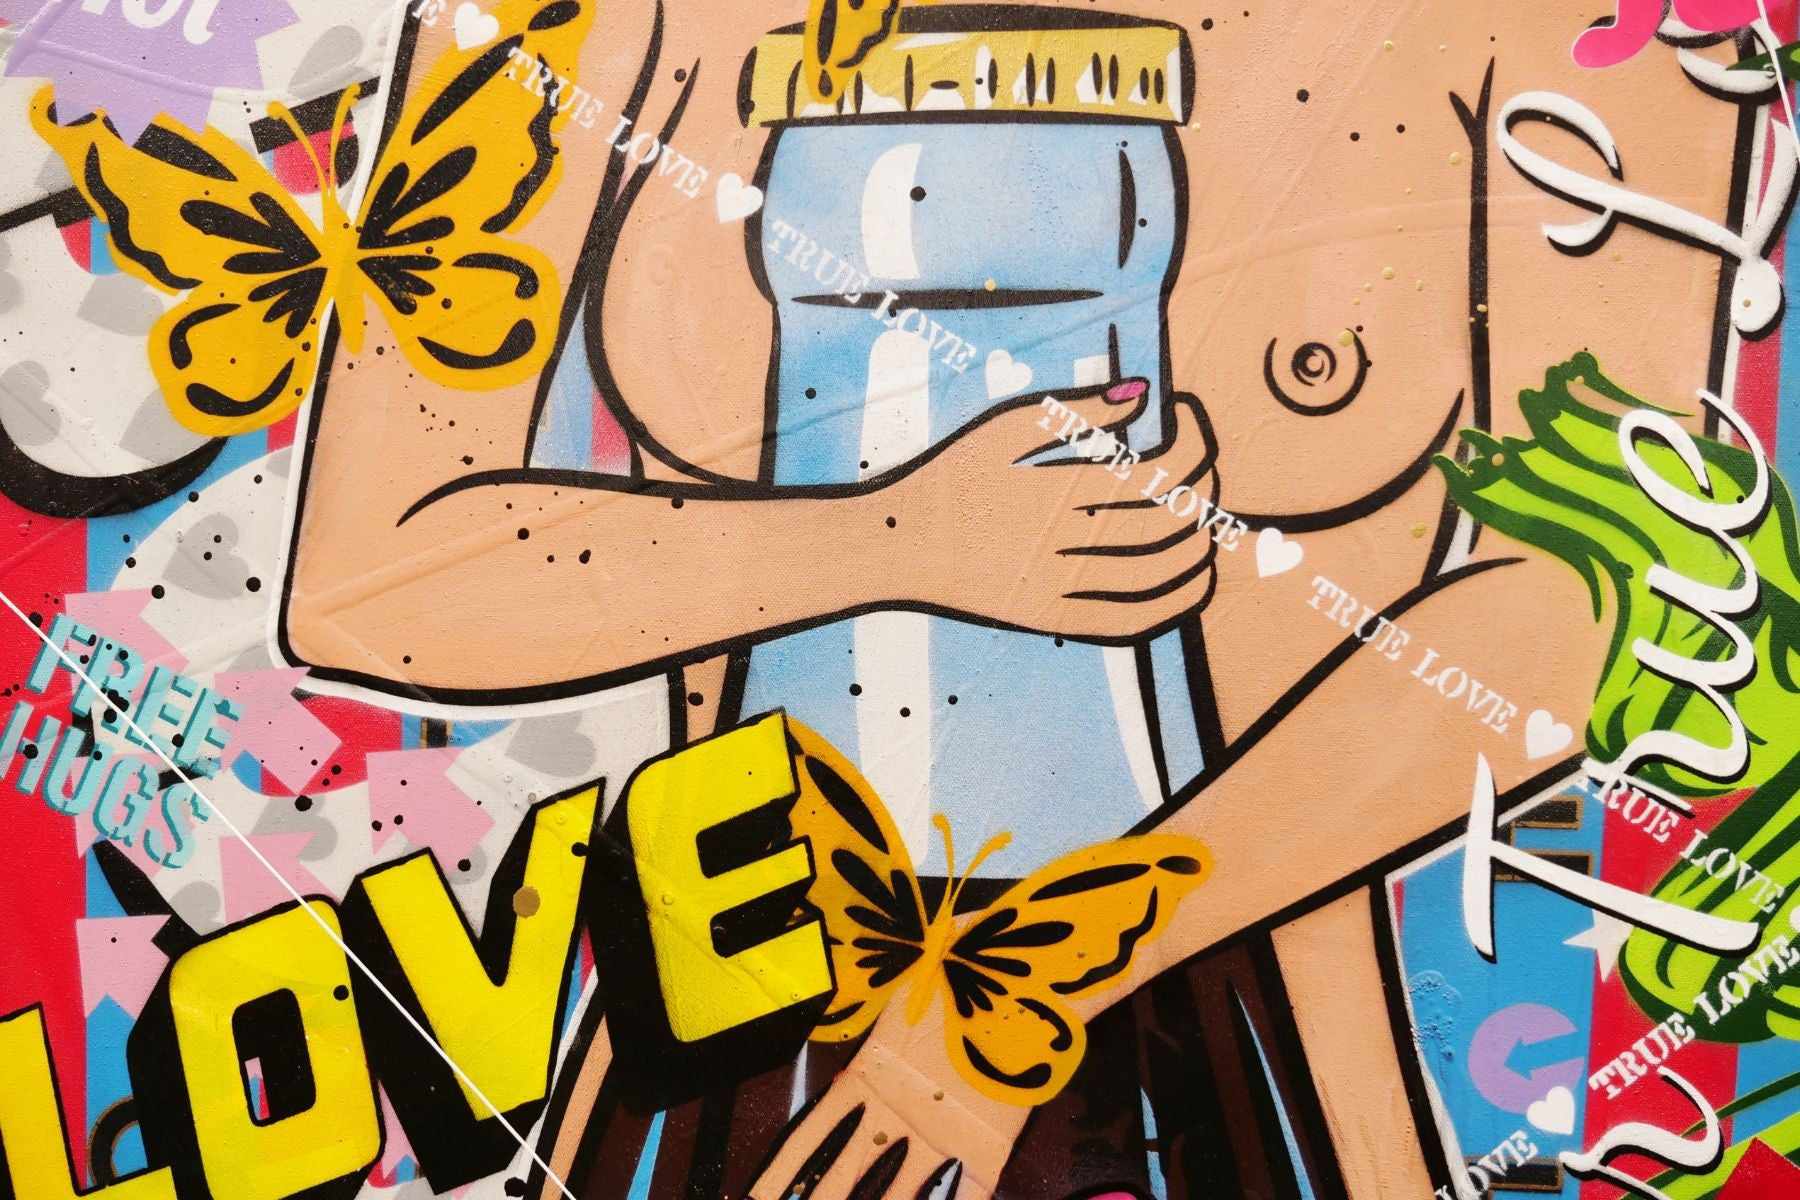 Giant Cokes 200cm x 80cm Nude Coke Bottle Textured Urban Pop Art Painting (SOLD)